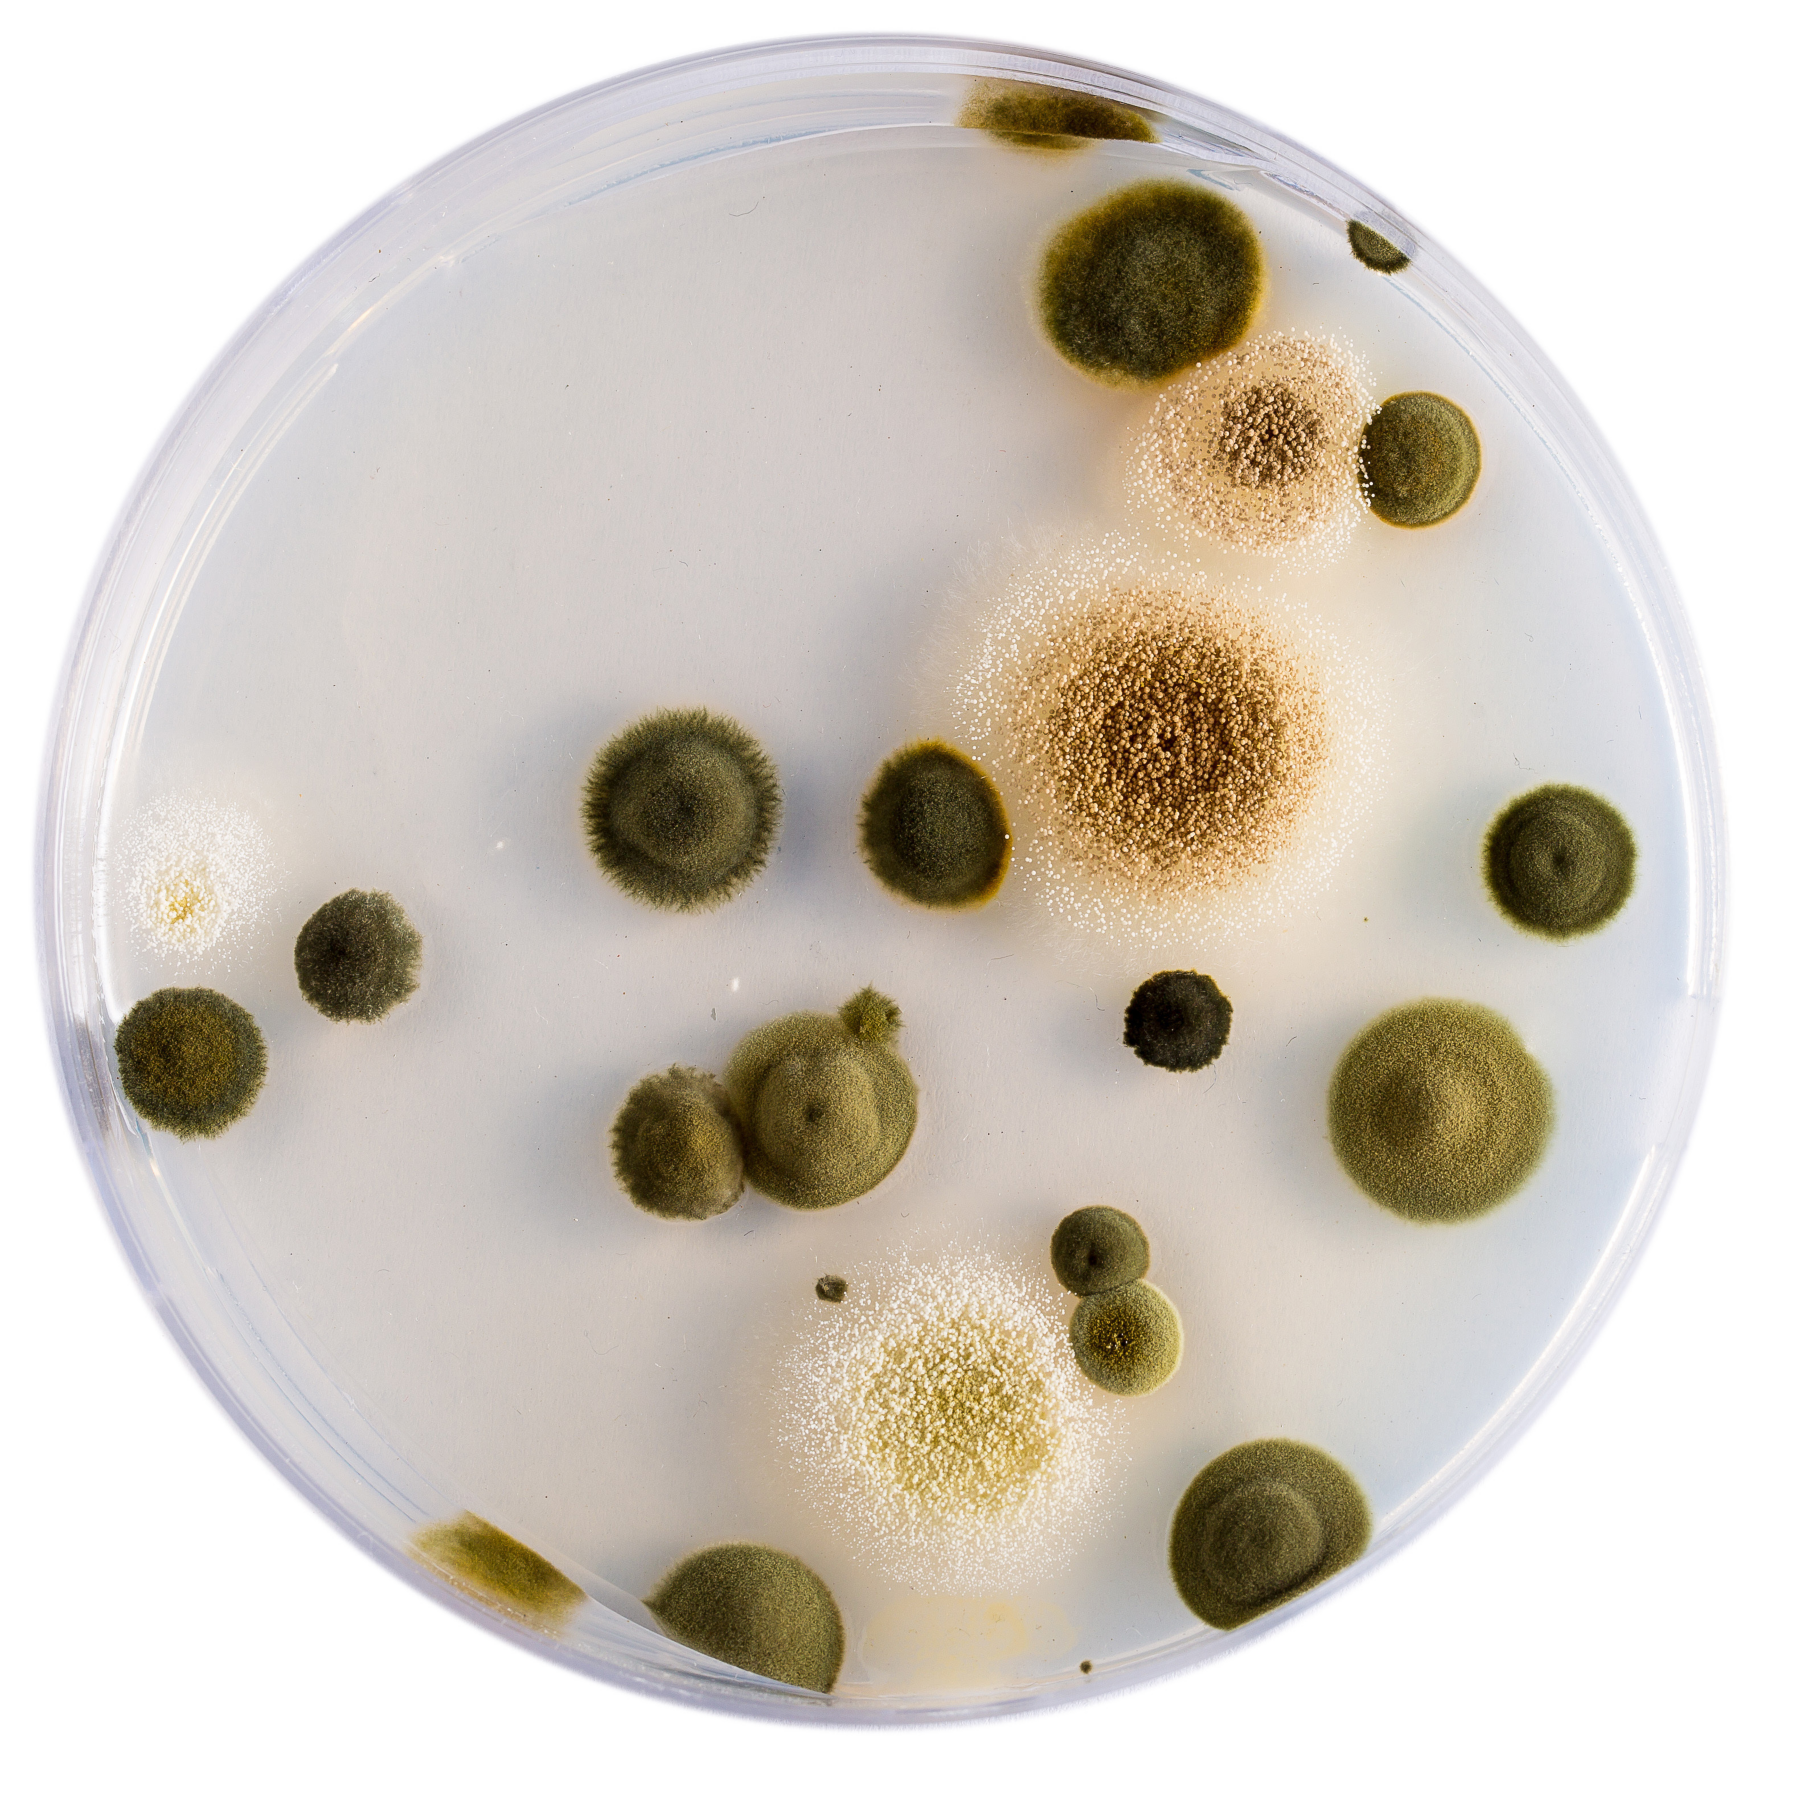 mold growth on petri dish